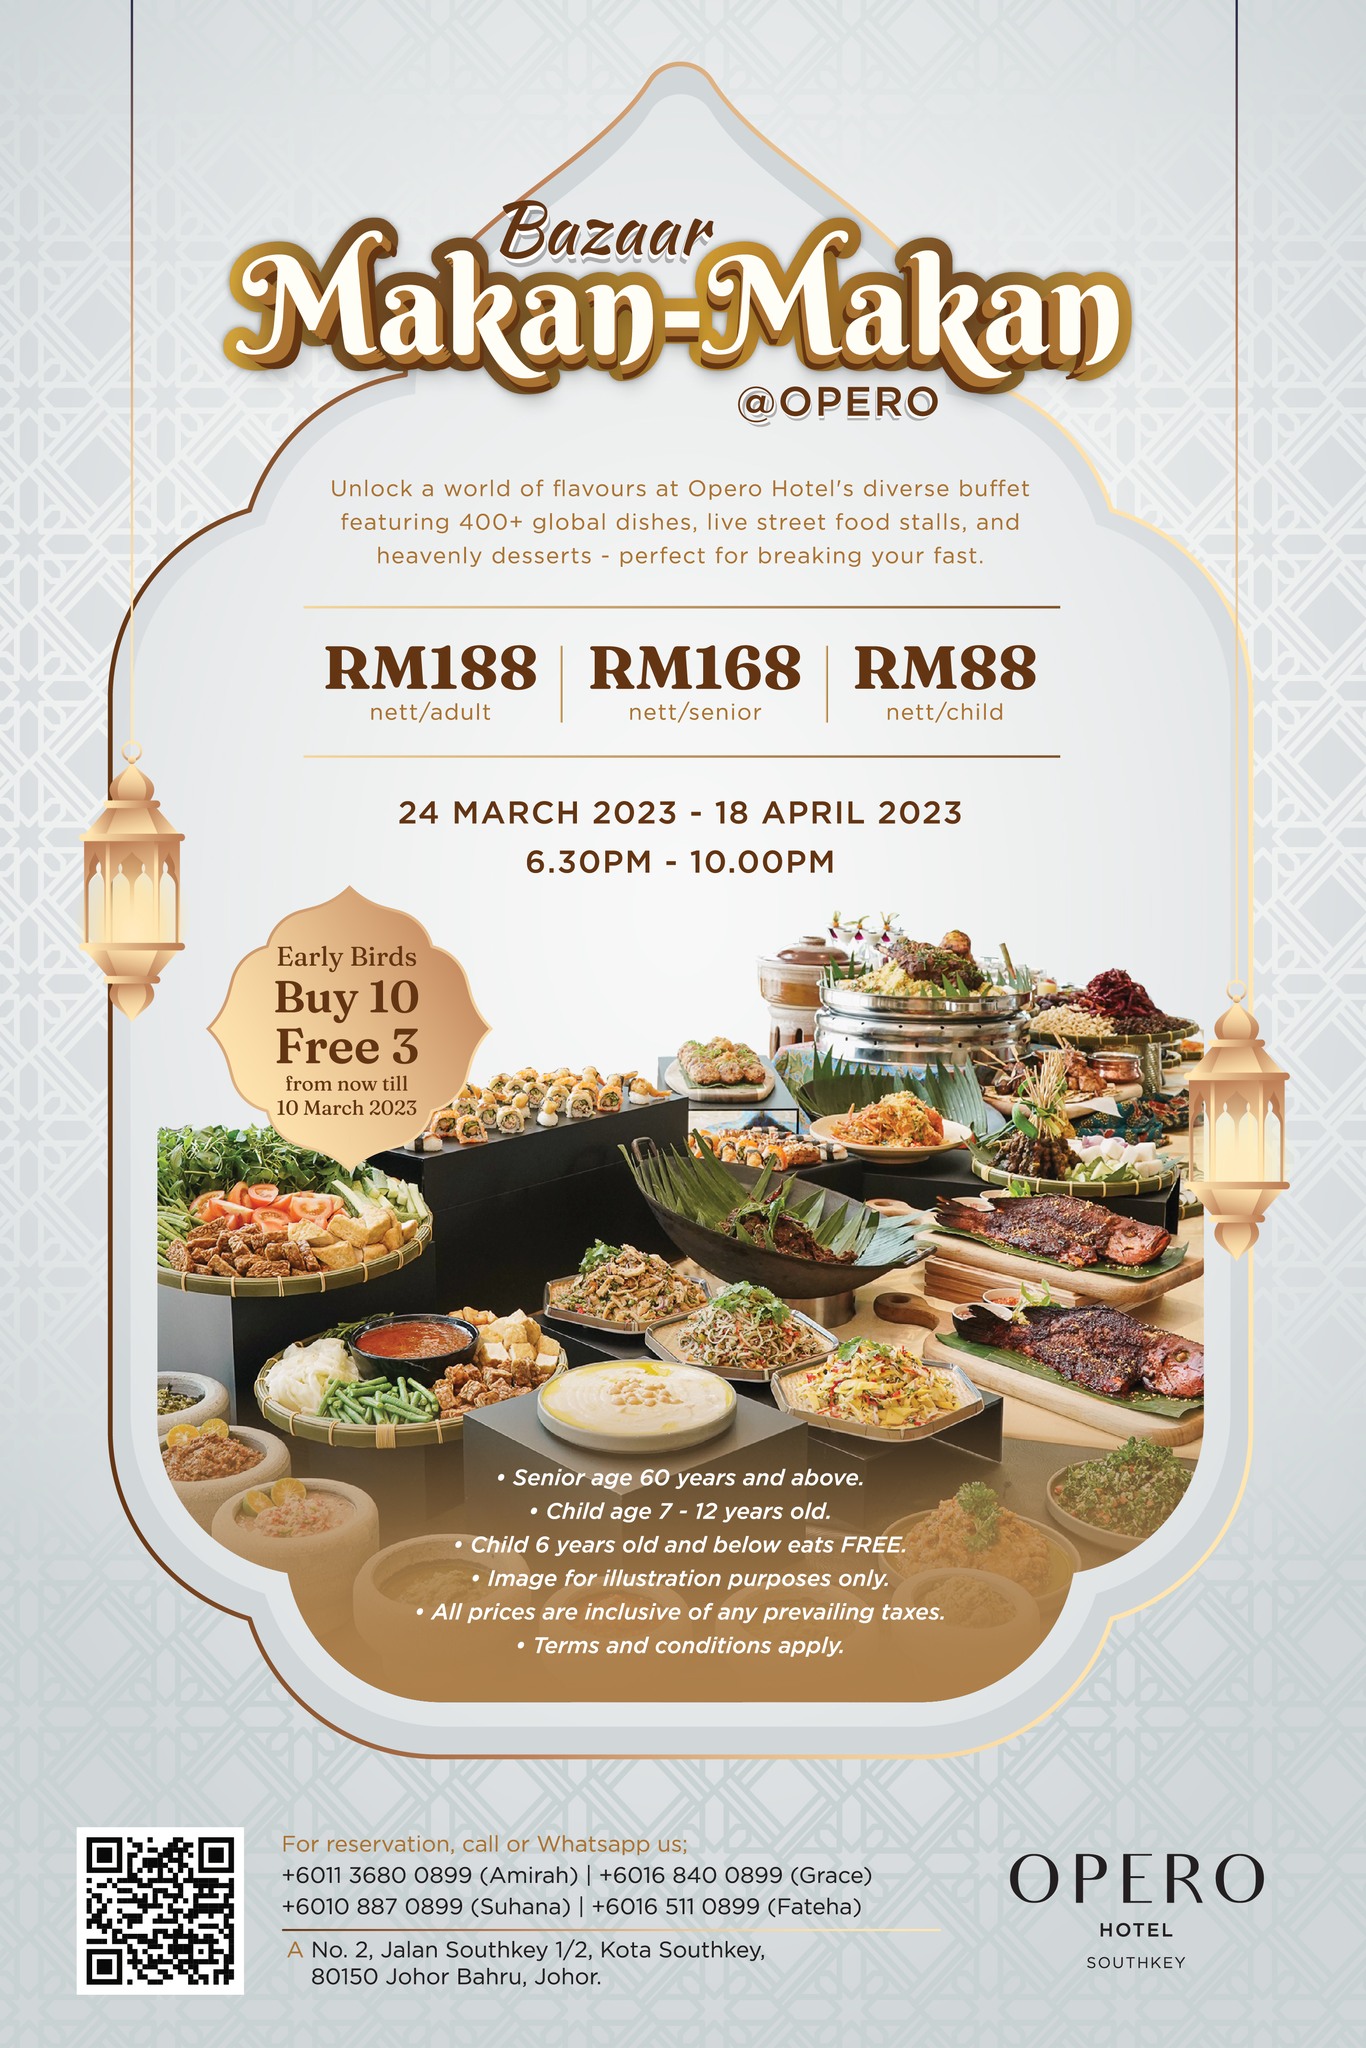 Bazaar Makan-Makan @ Opero Returns For A Second Year This Ramadan